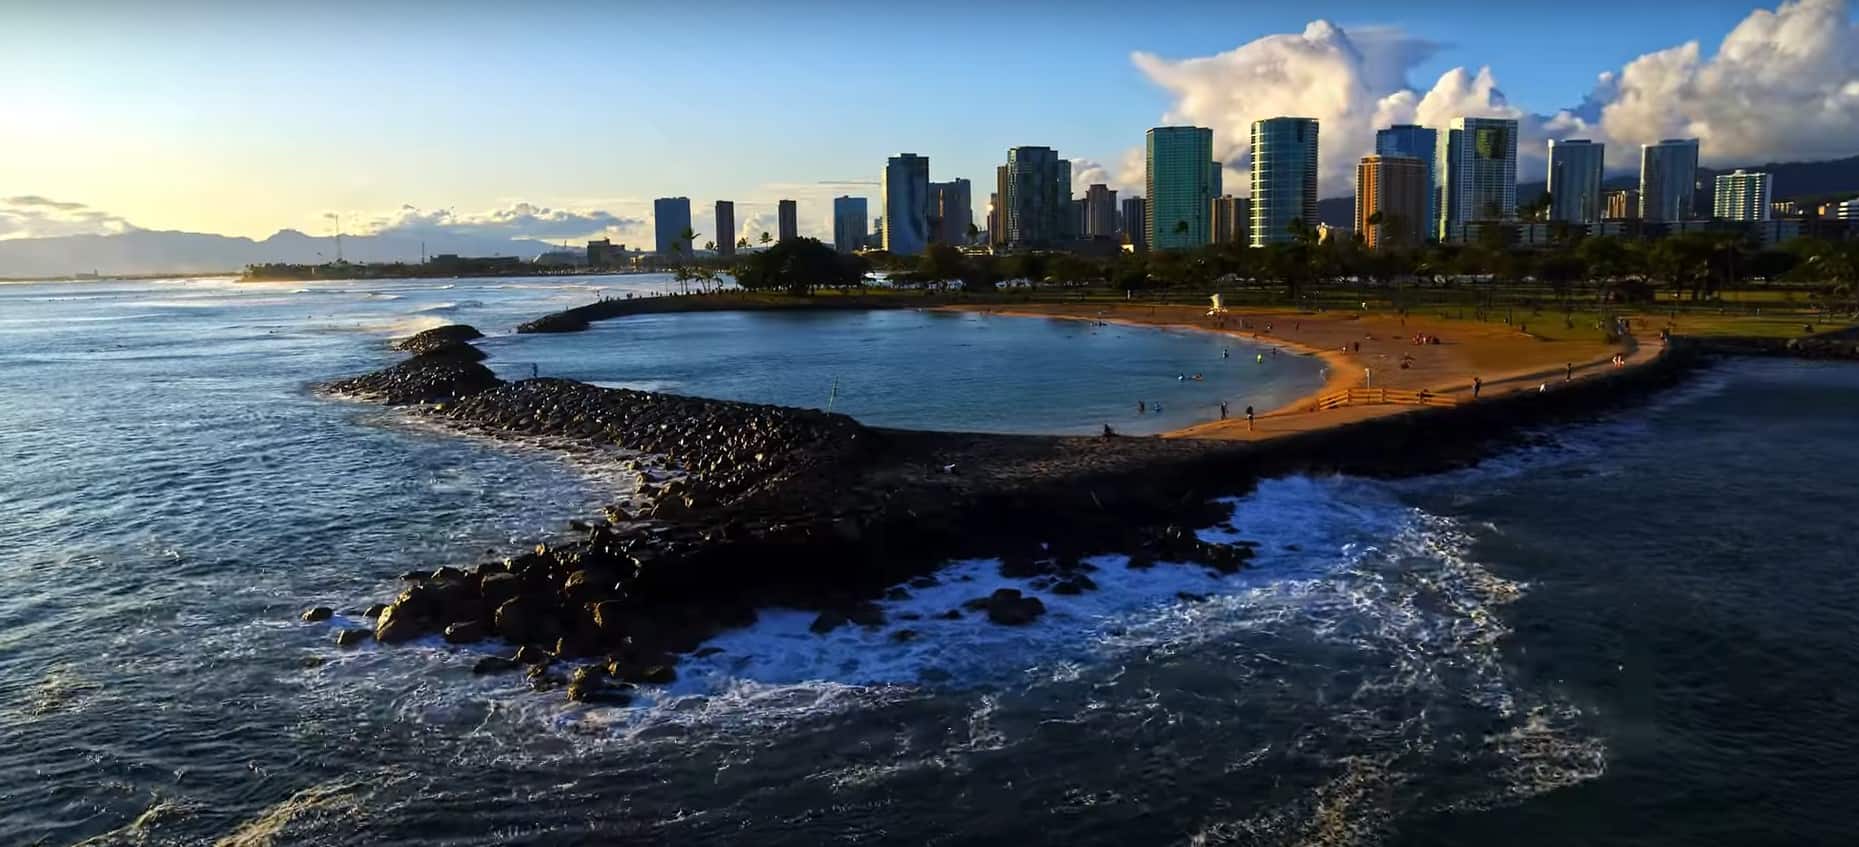 NCIS Hawaii Filming Locations